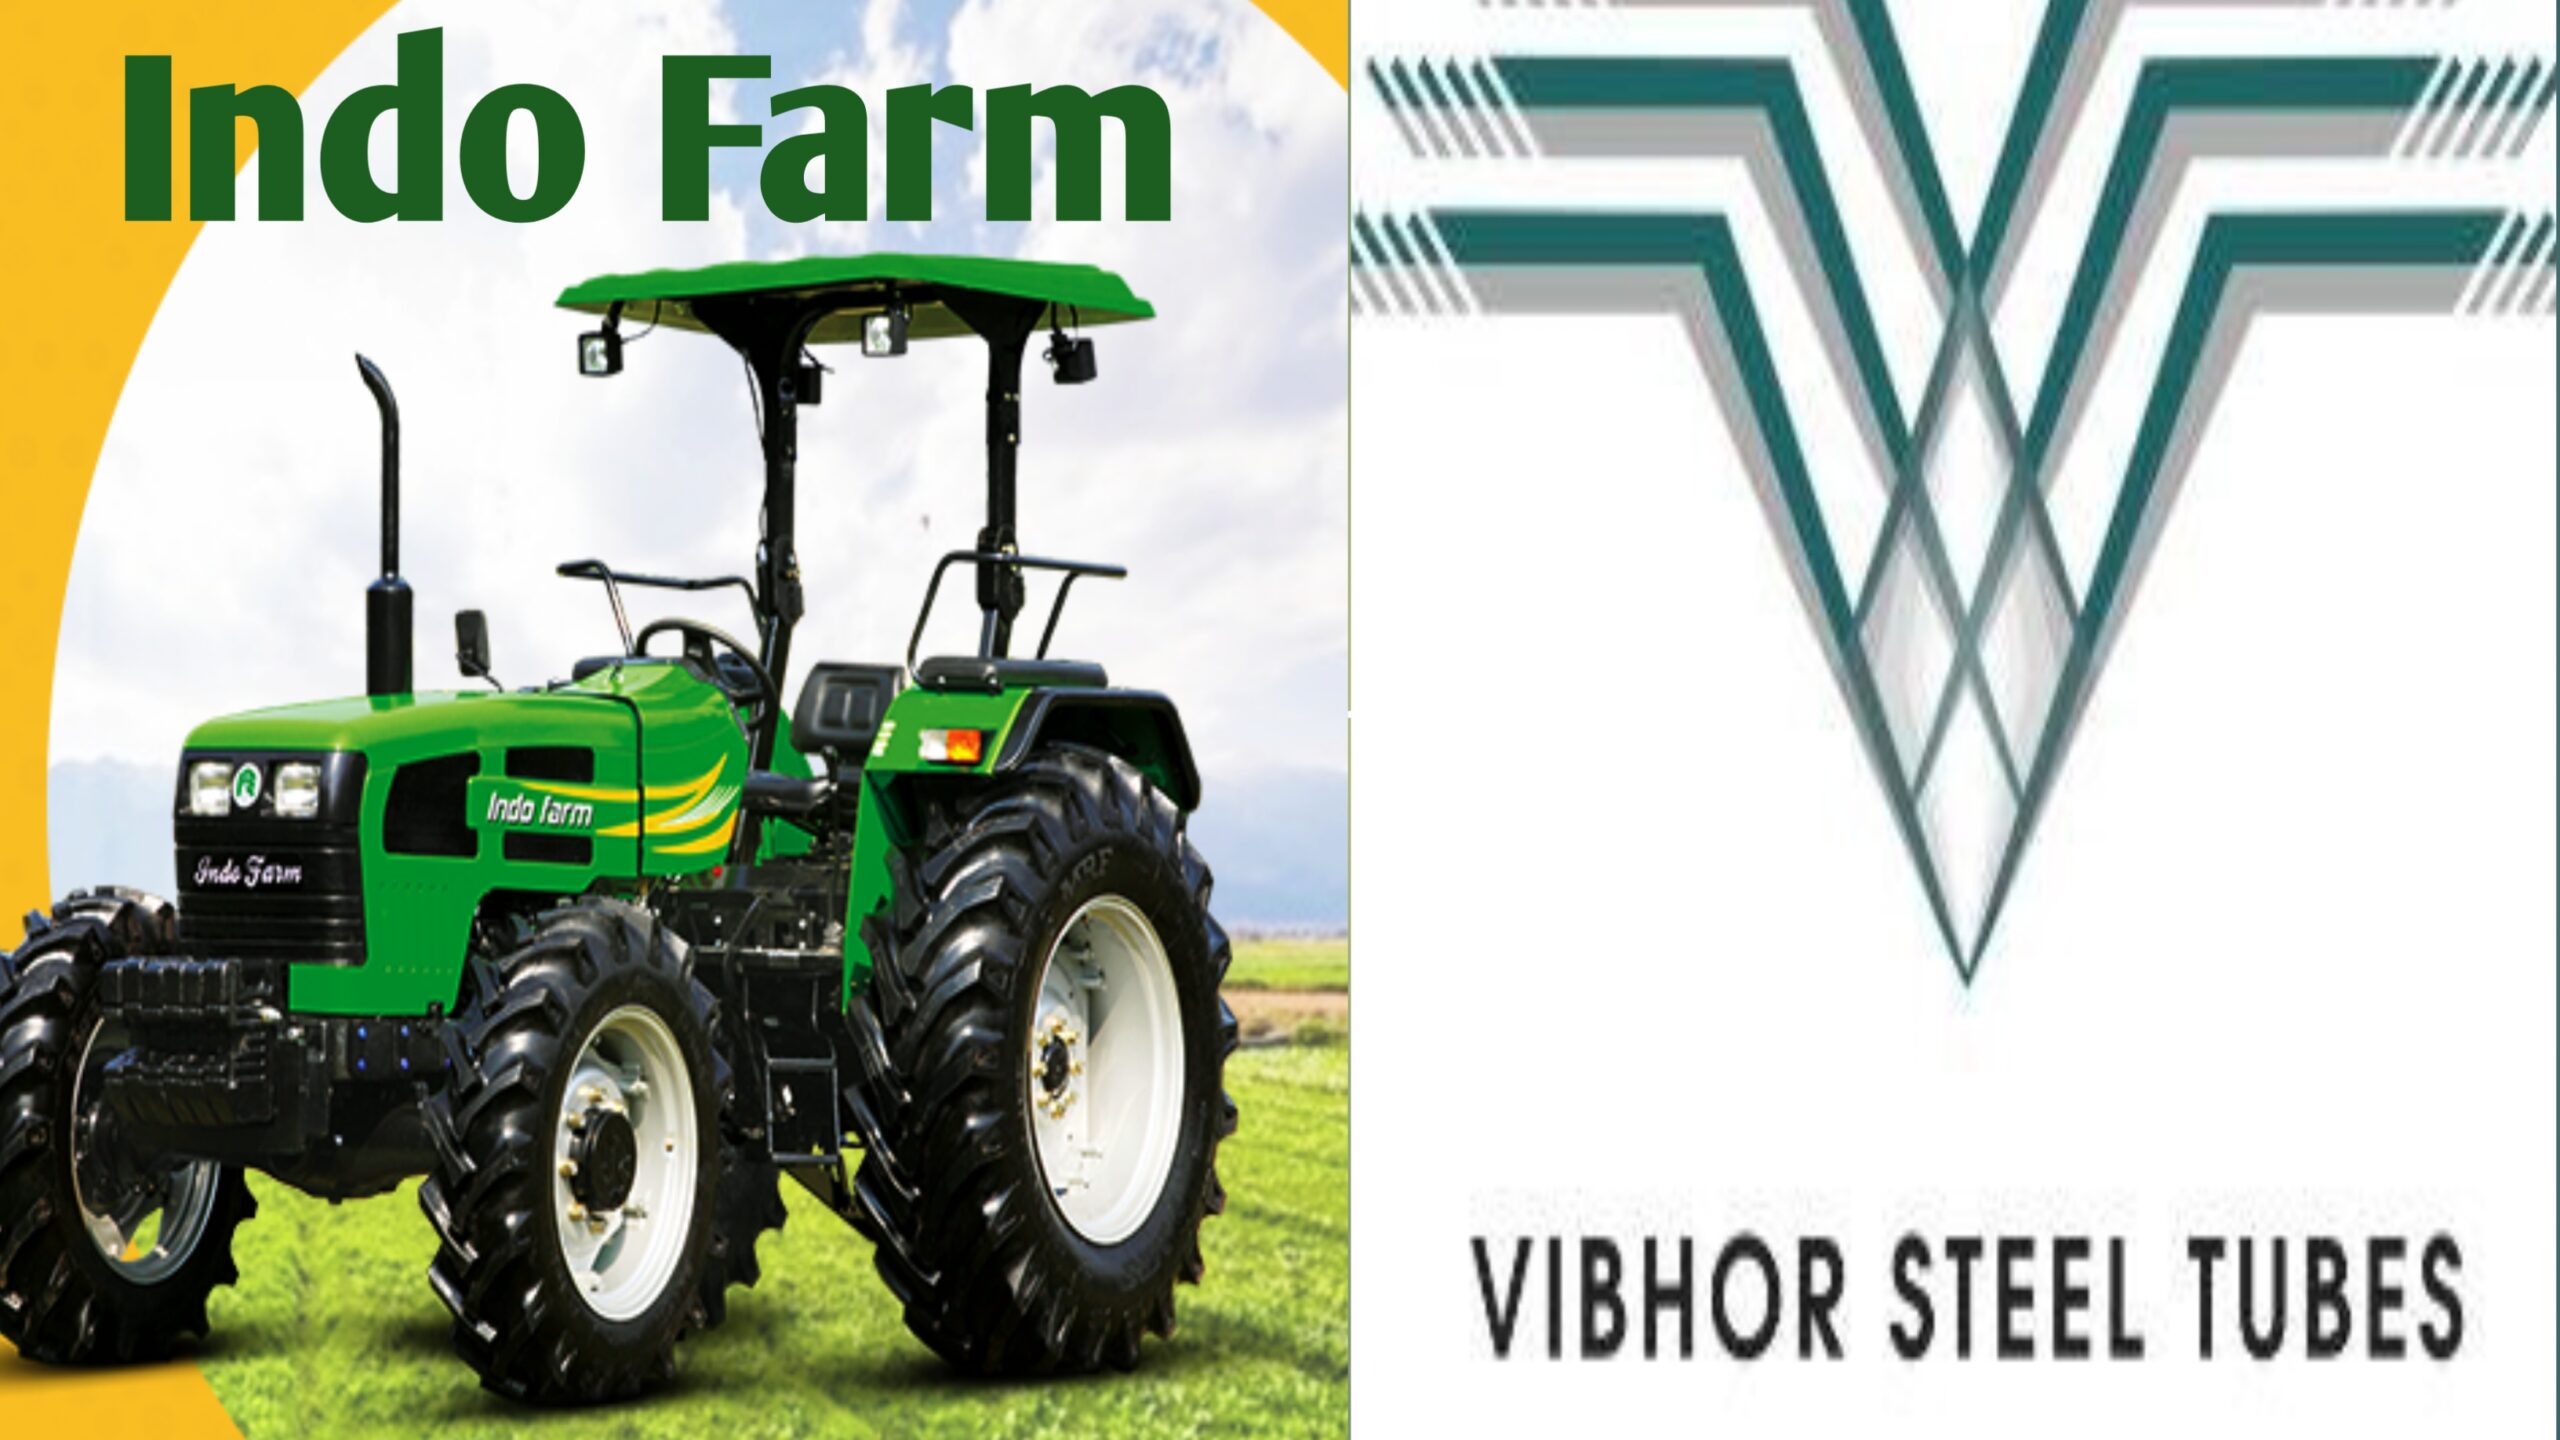 Indo Farm Equipment,, Vibhor Steel Limited